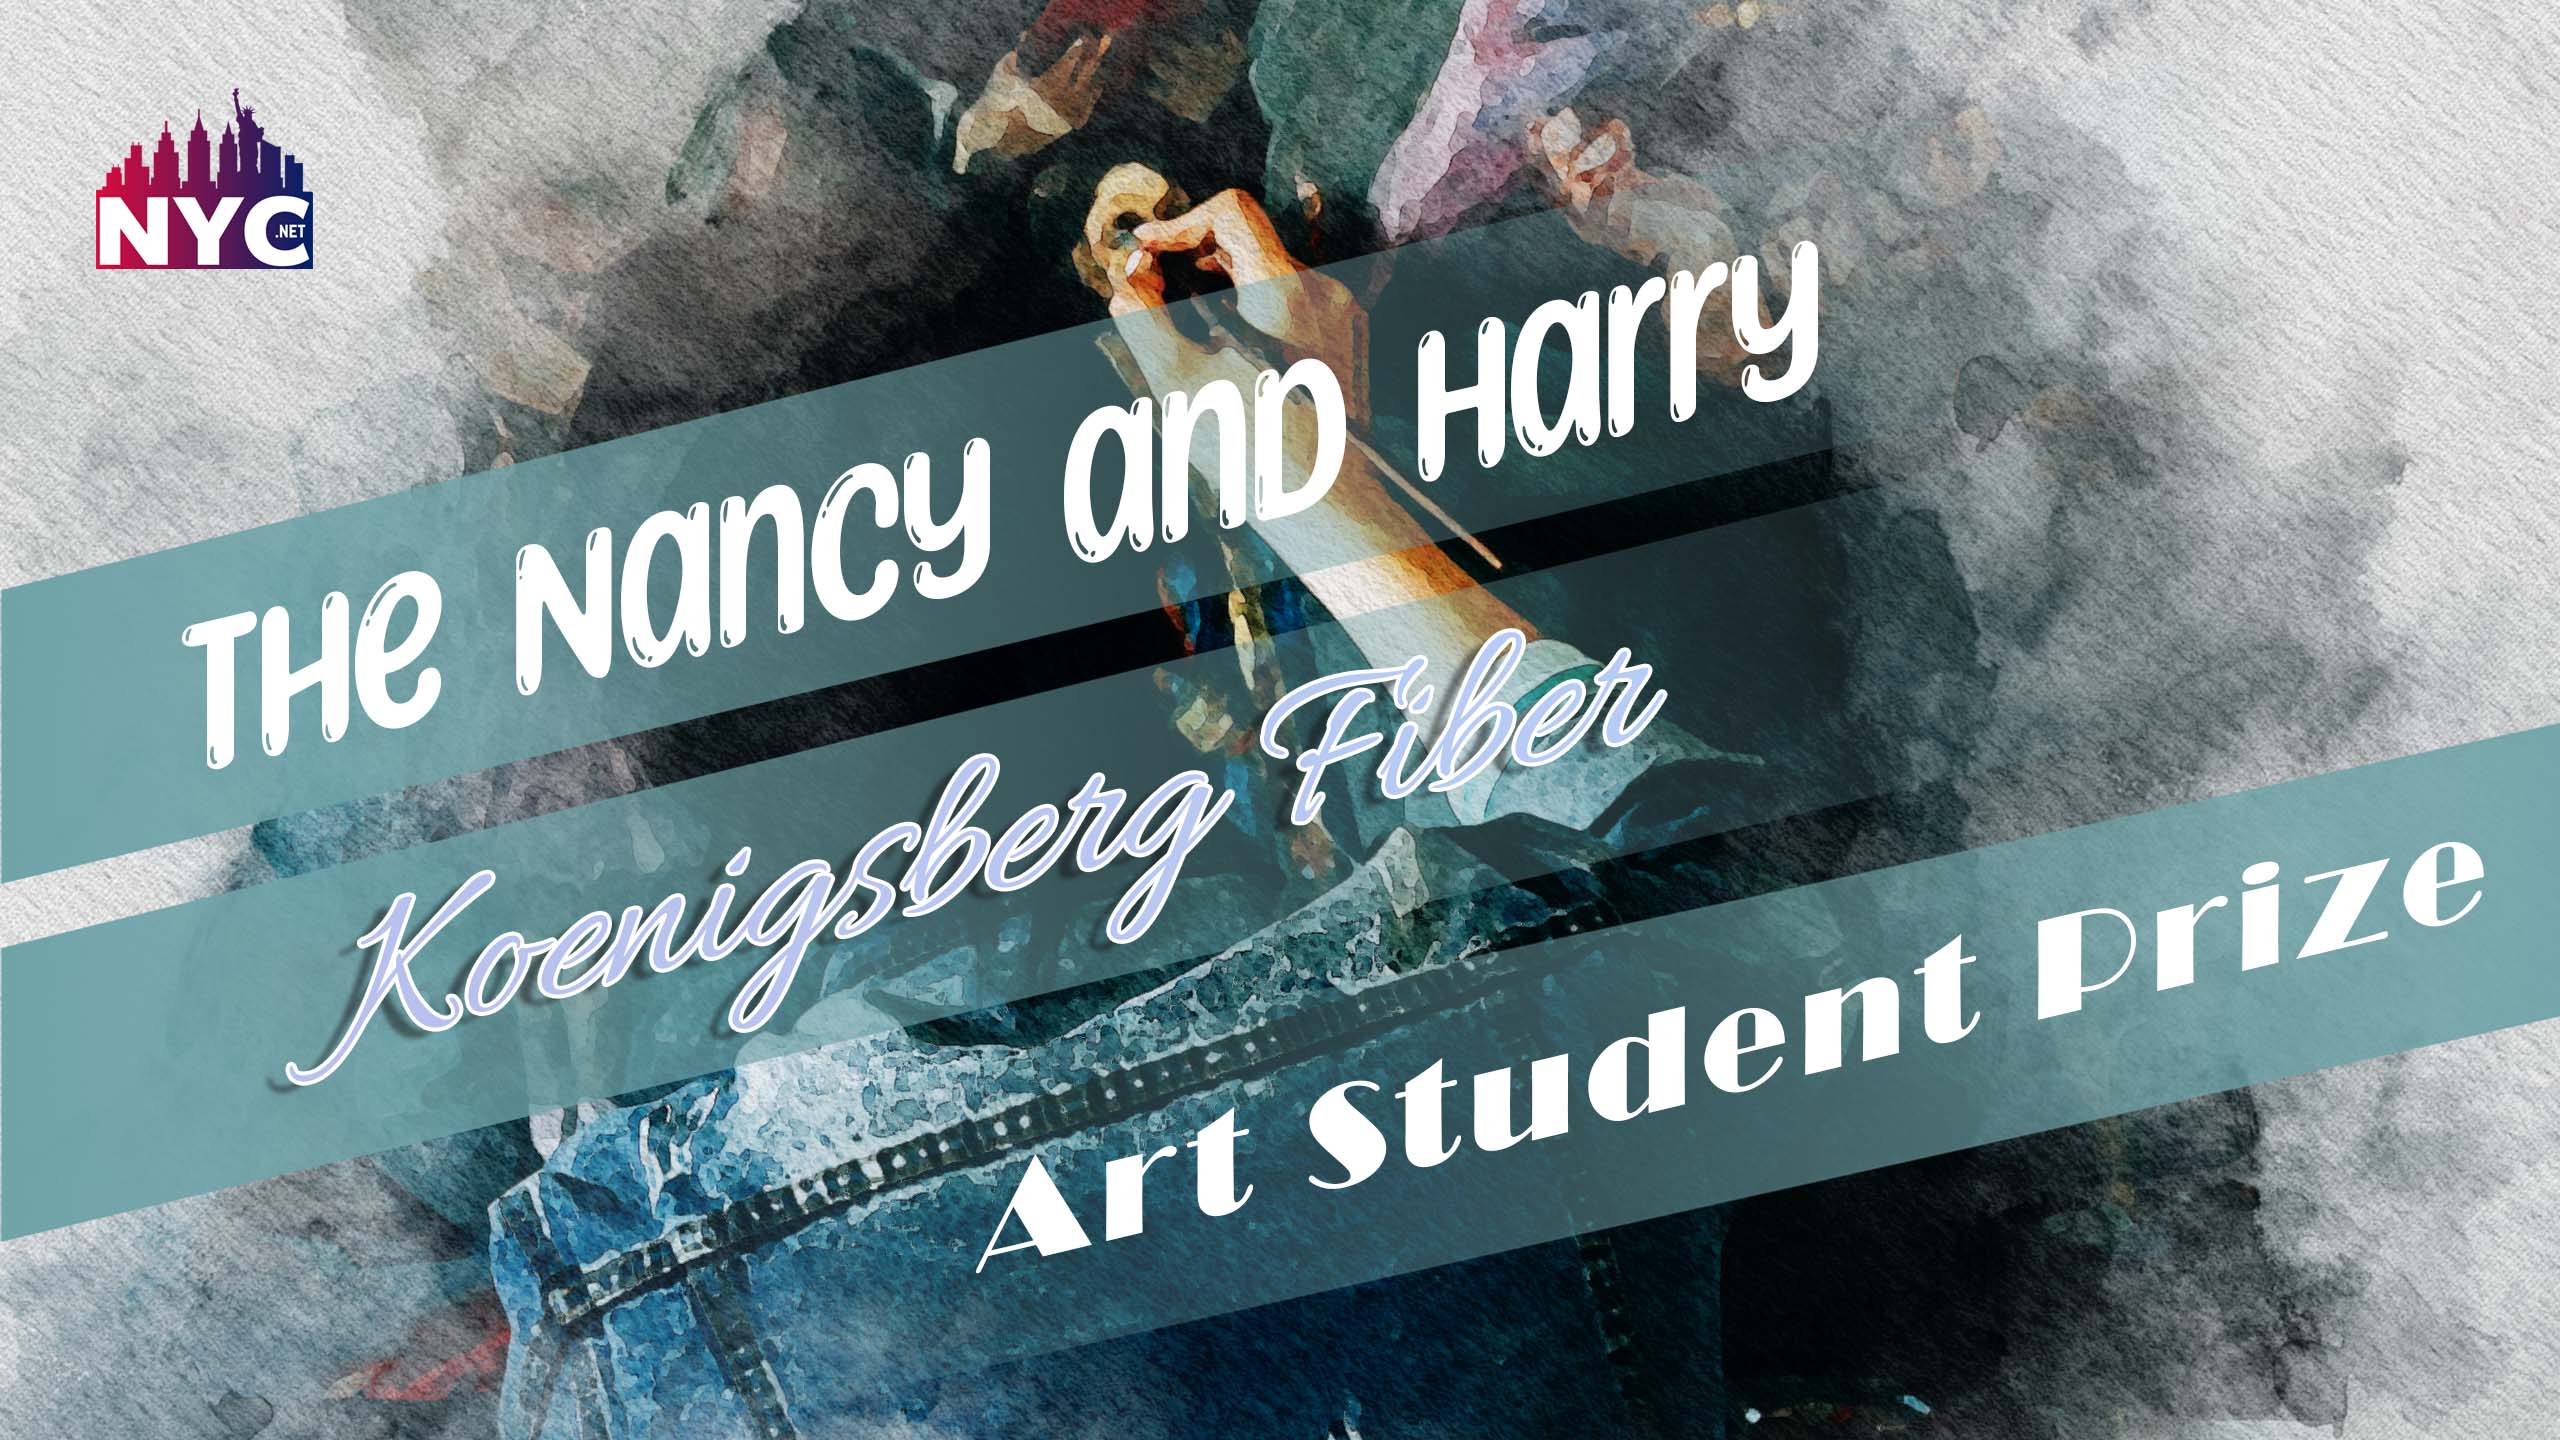 Nancy and Harry Koenigsberg Fiber Art Student Award